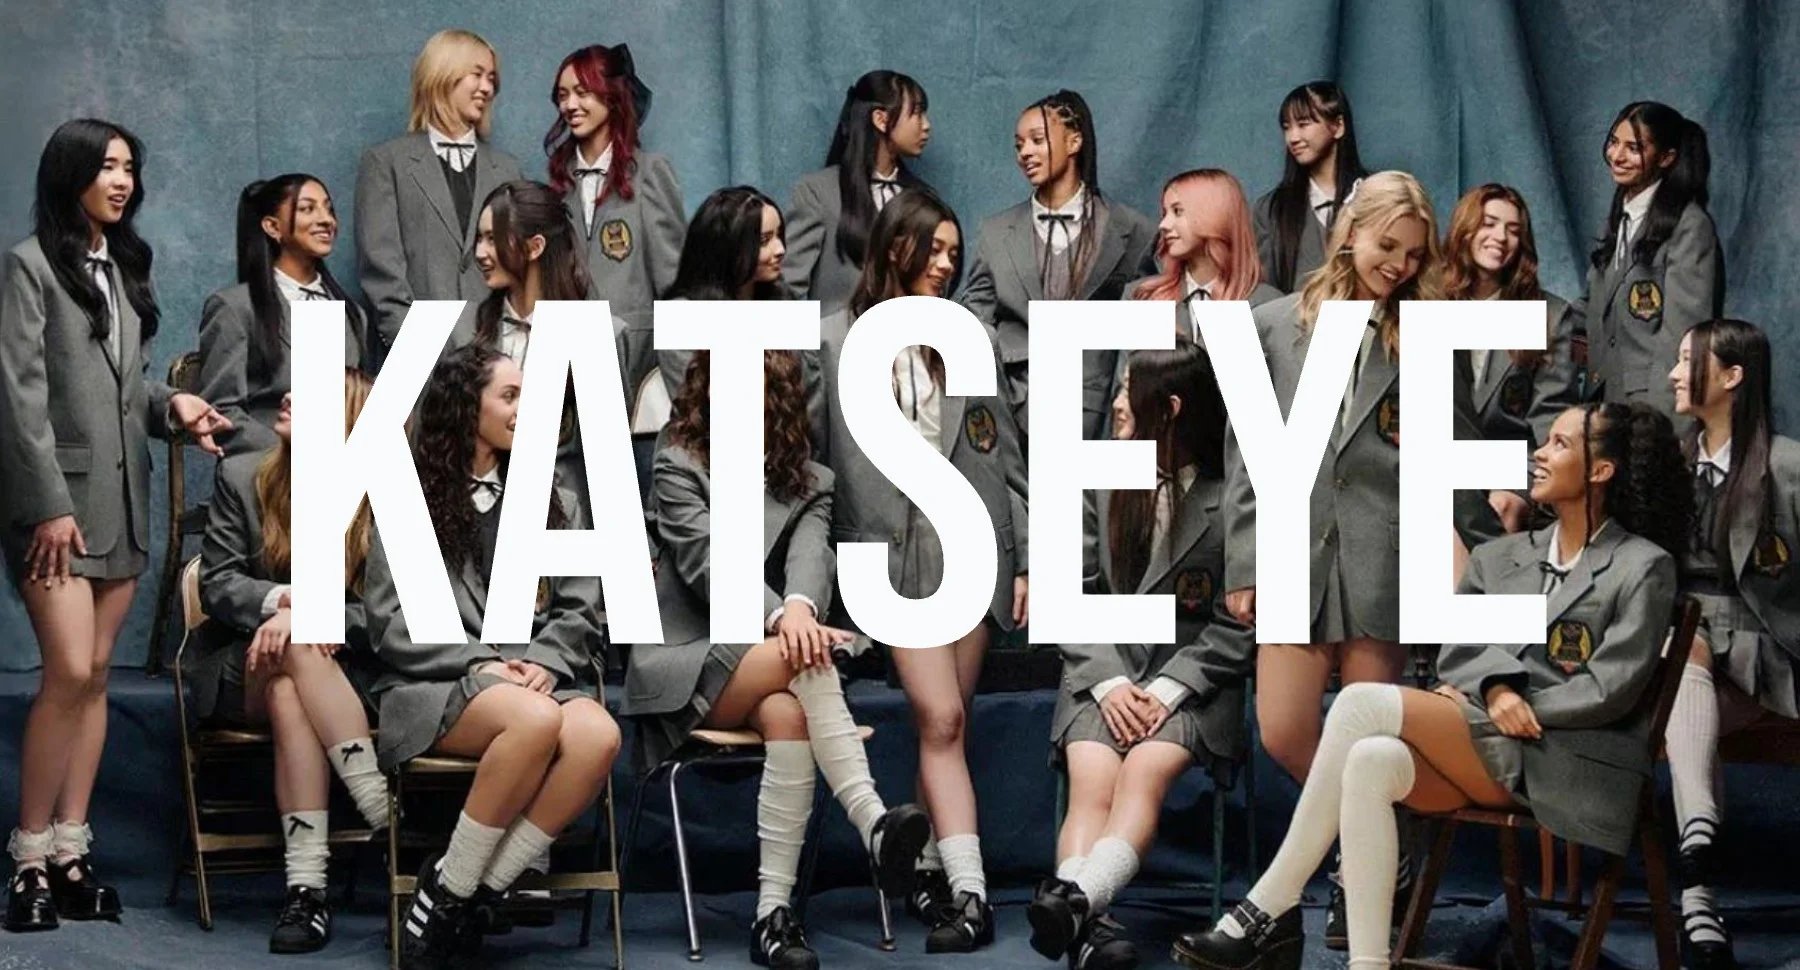 HYBE x Geffen Records Debut New K-Pop Girl Group, Katseye